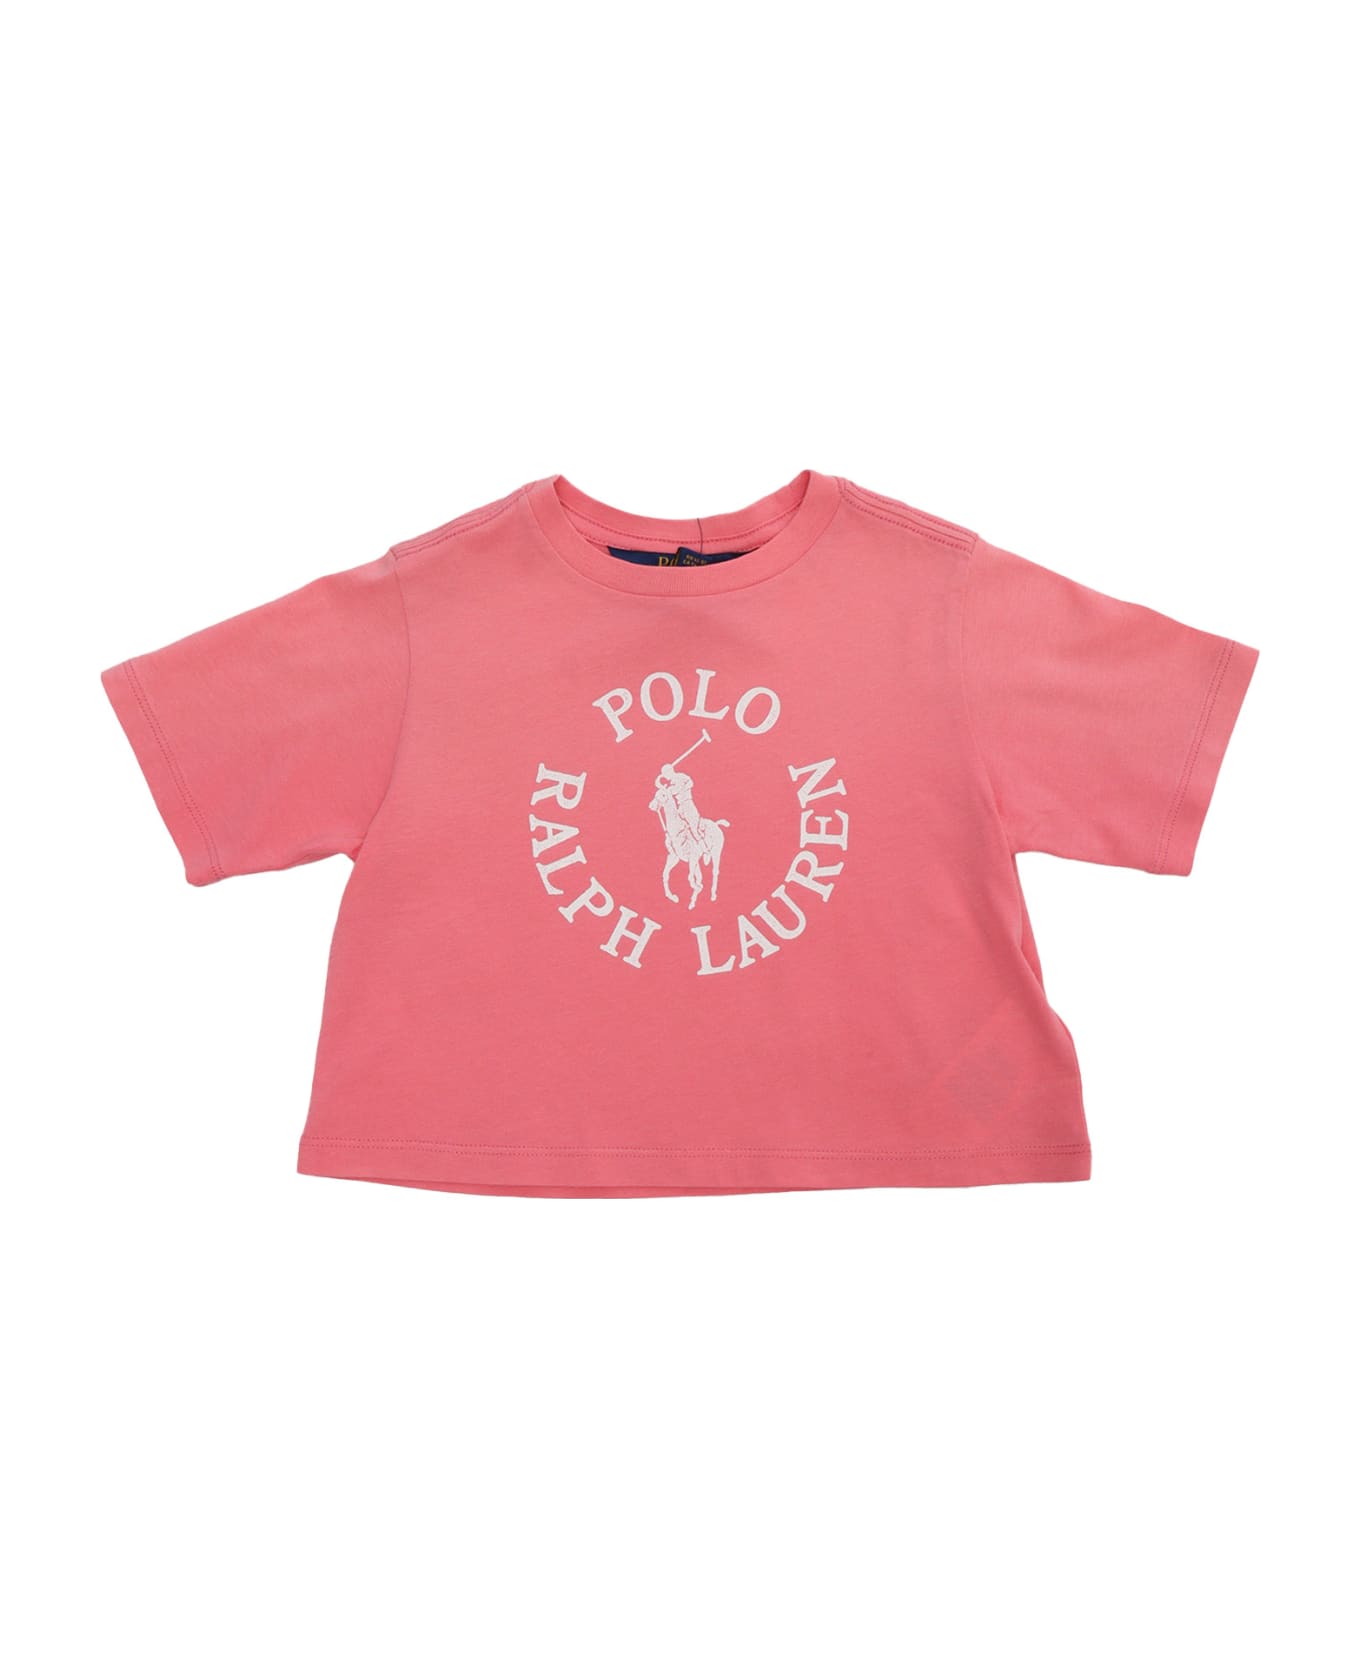 Polo Ralph Lauren Pink Cropped T-shirt - PINK